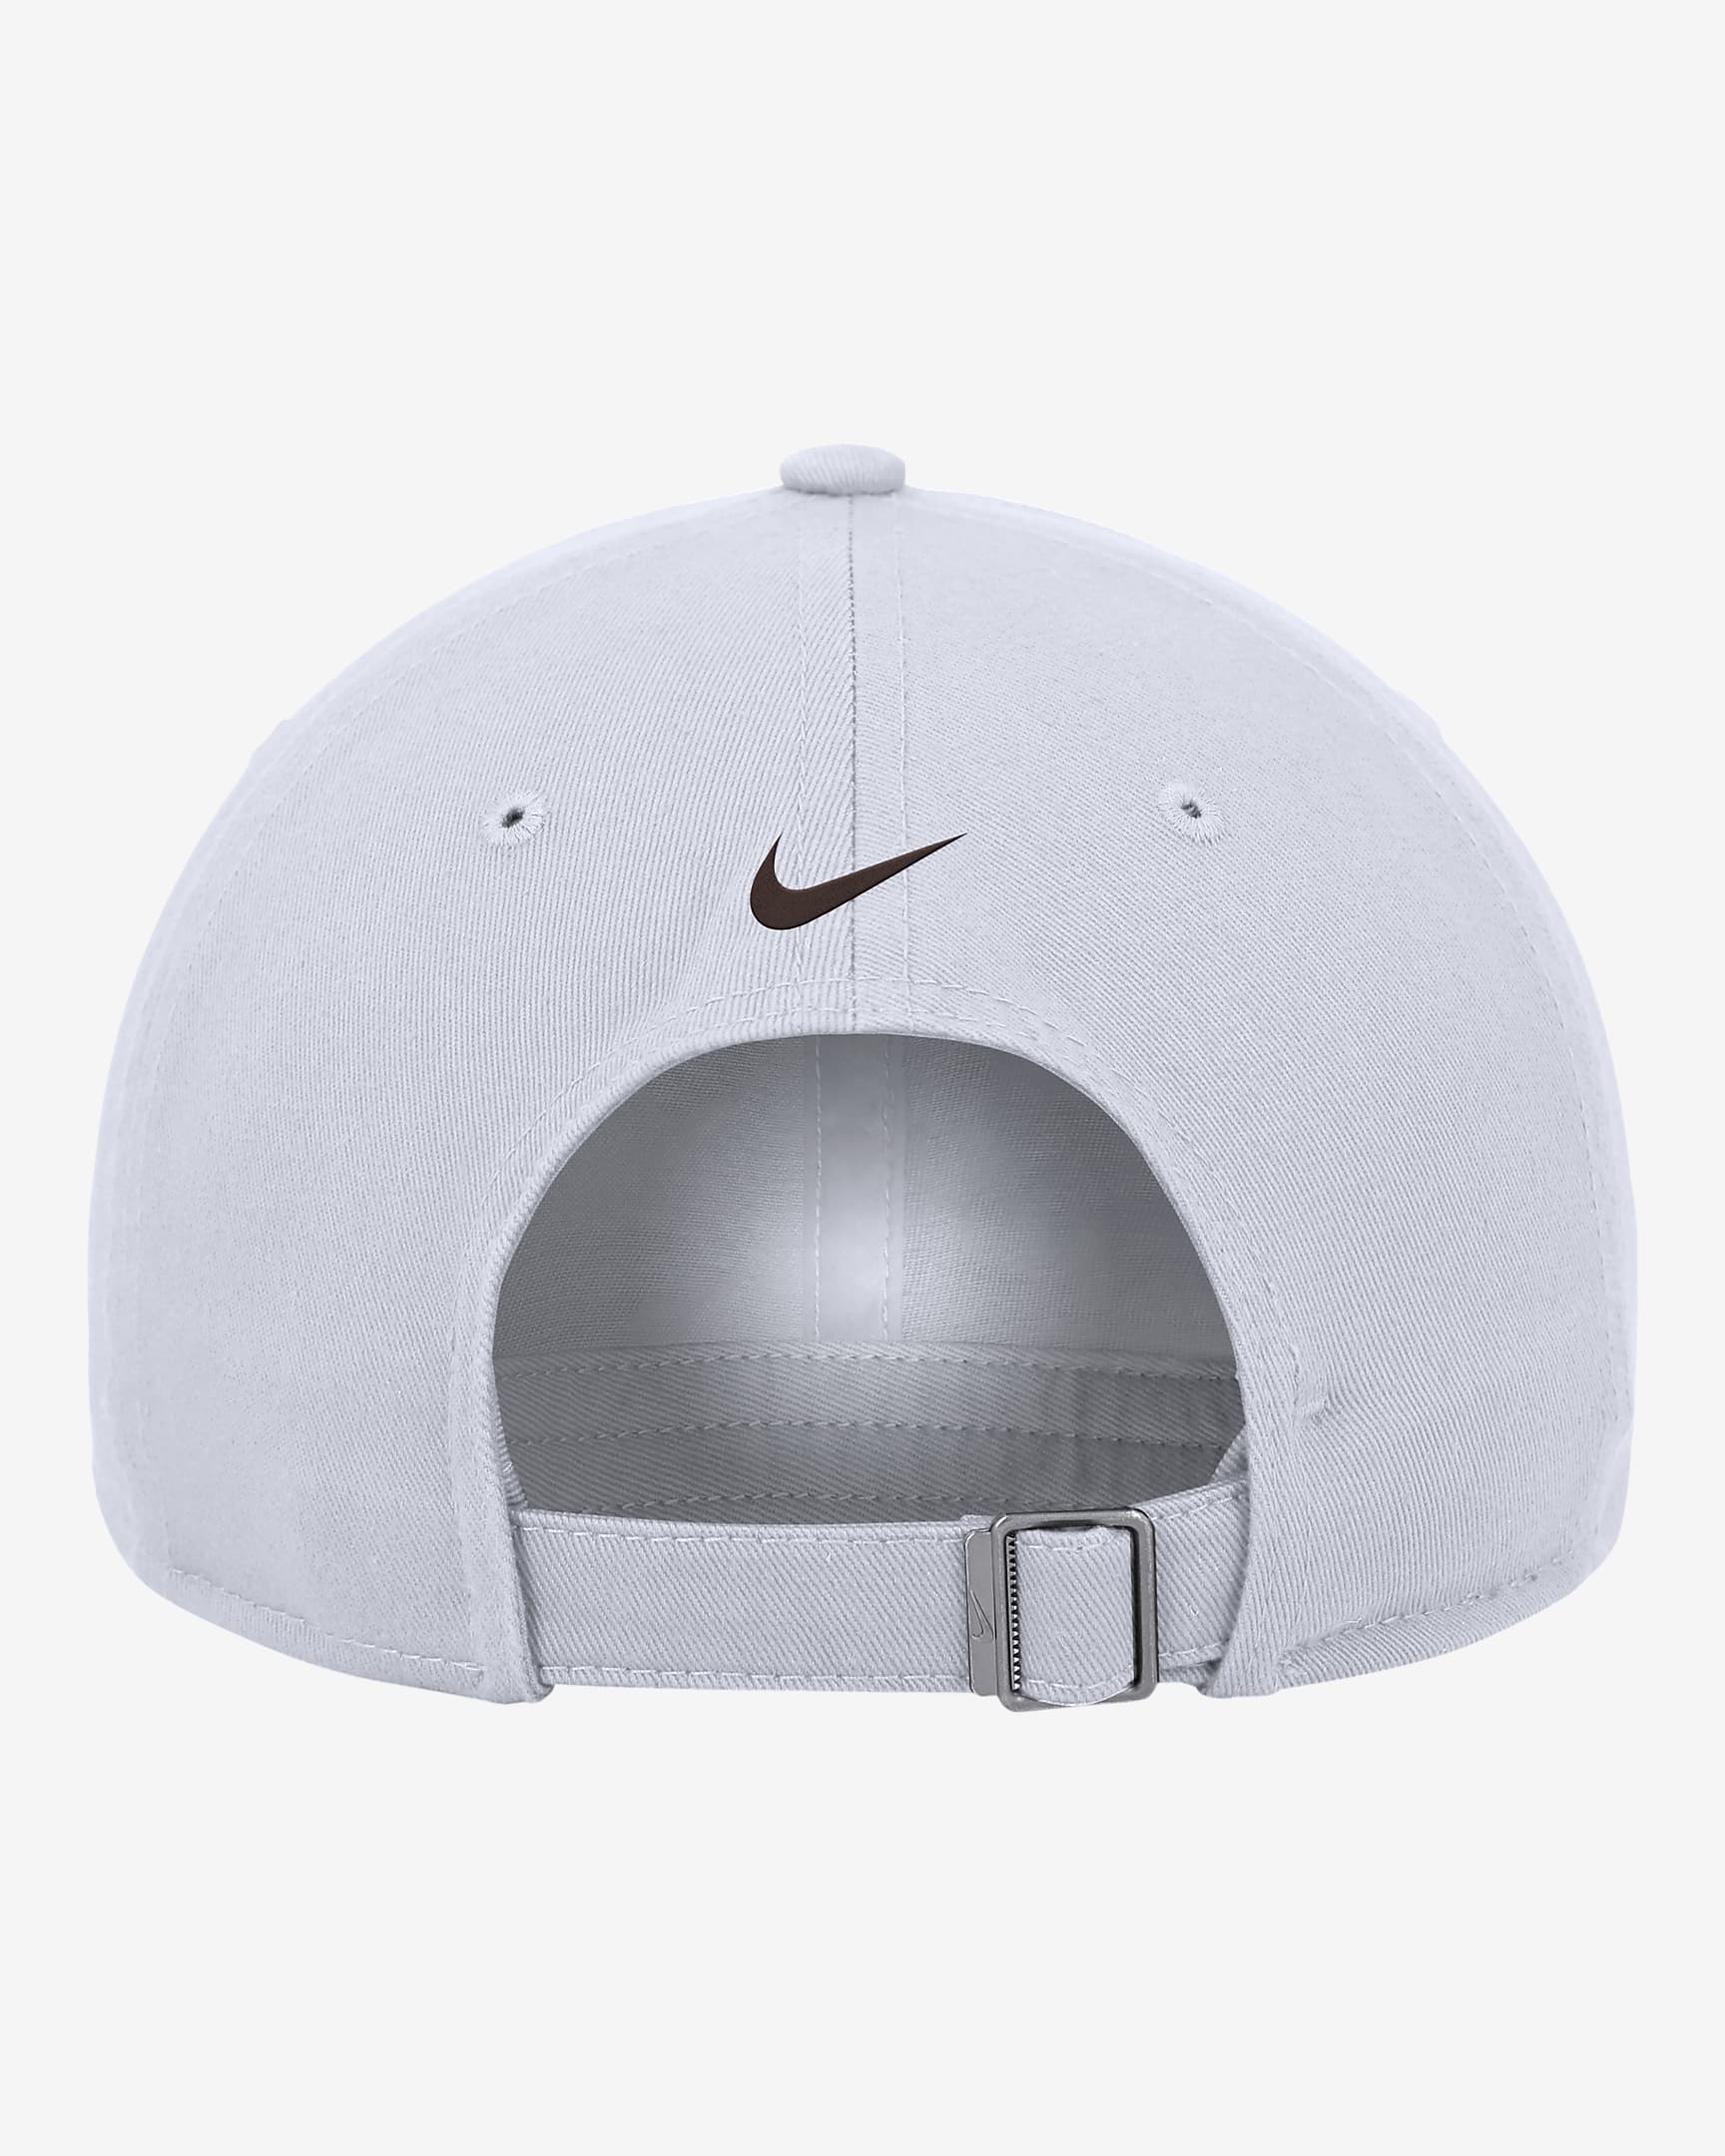 Nike Adjustable Golf Hat - White